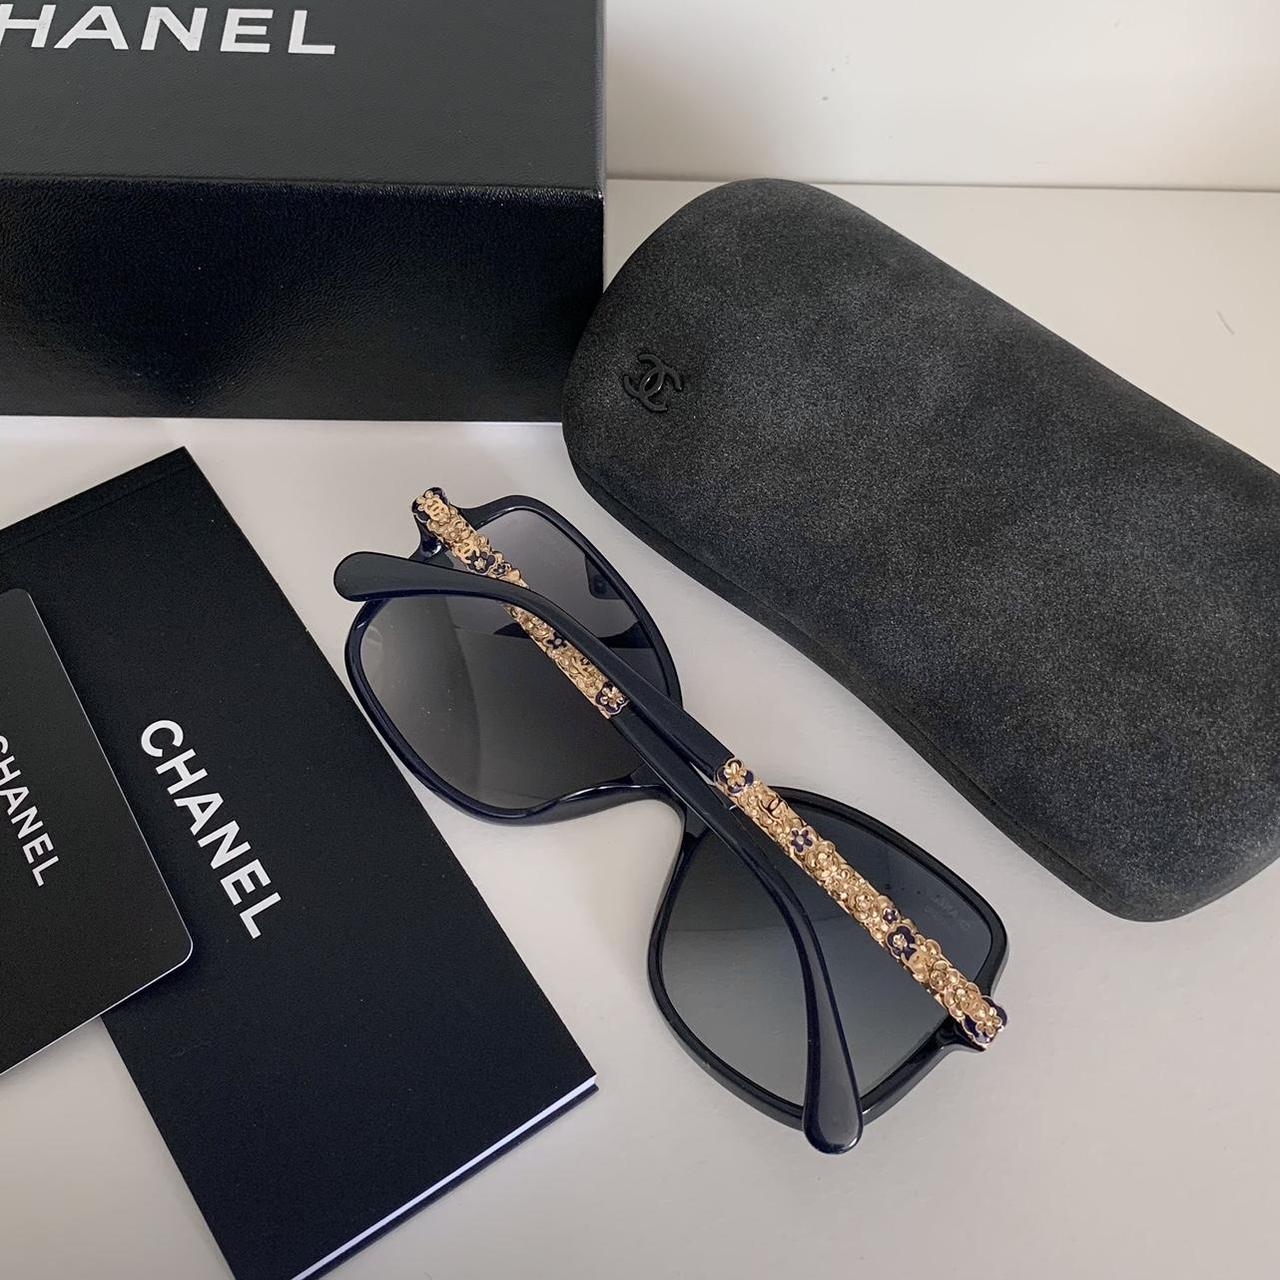 Chanel special polarized sunglasses. Dark navy - Depop